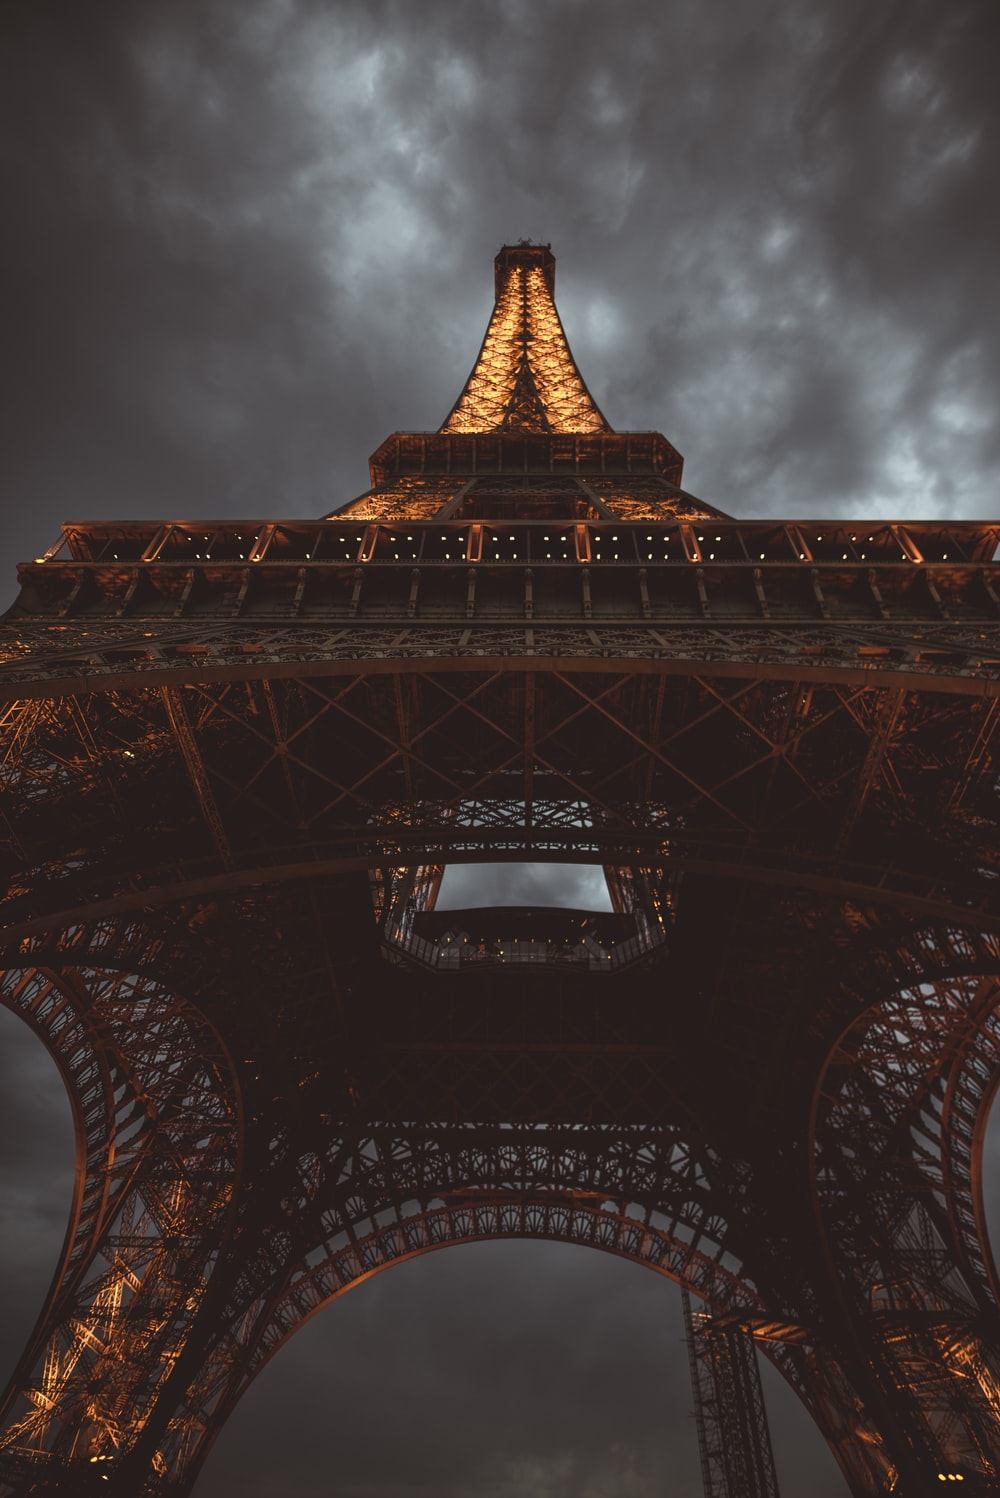 Paris Rain Picture. Download Free Image